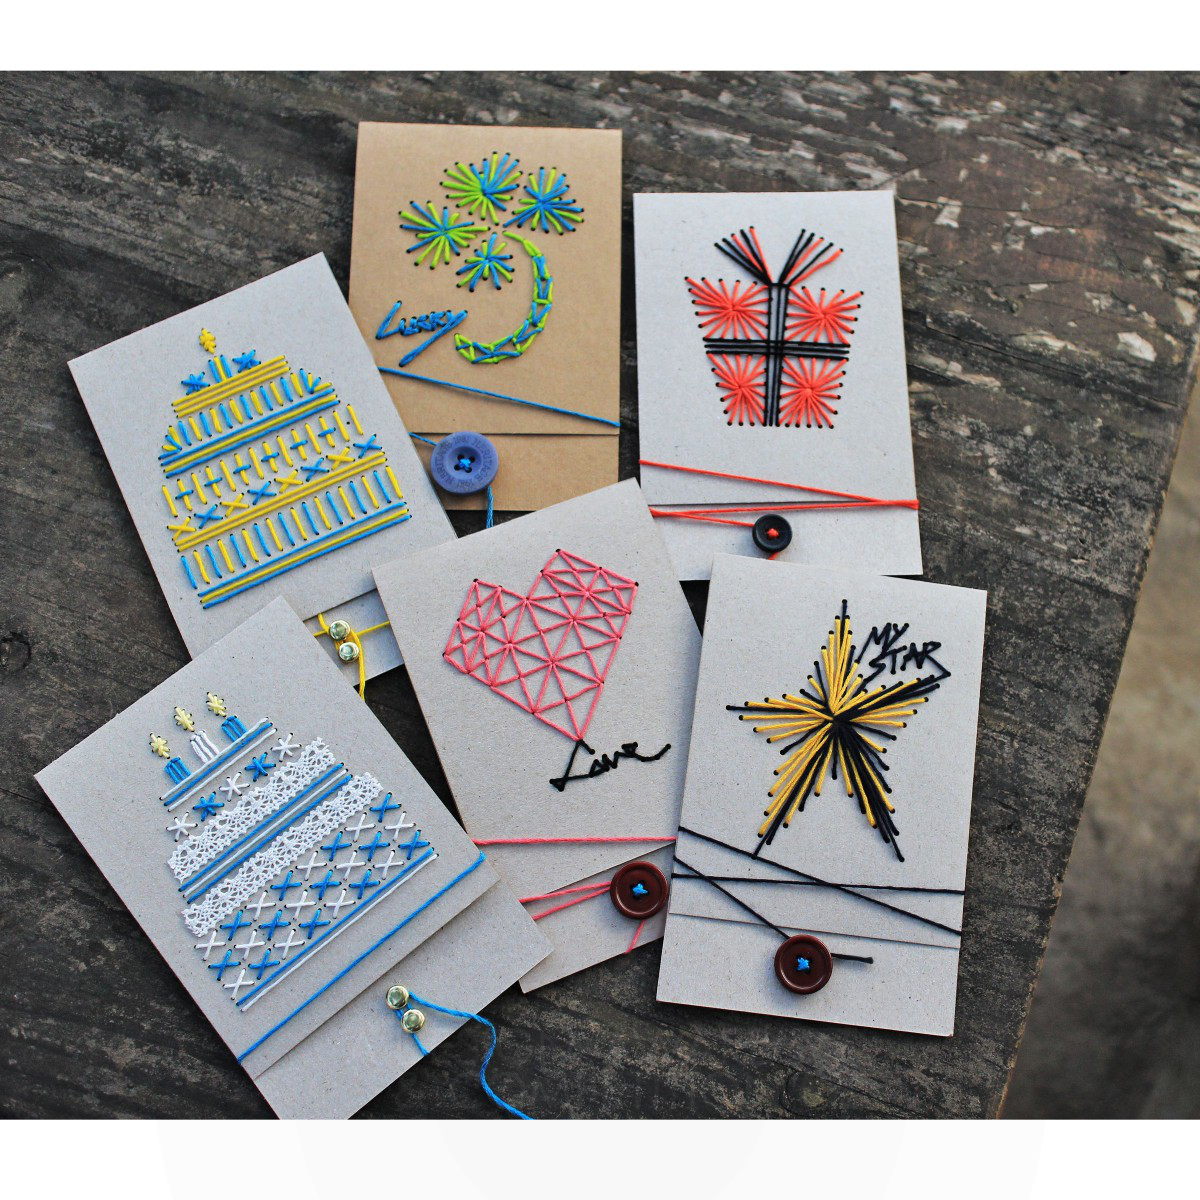 Stitching Gifts DIY card by Chang Hung Yu